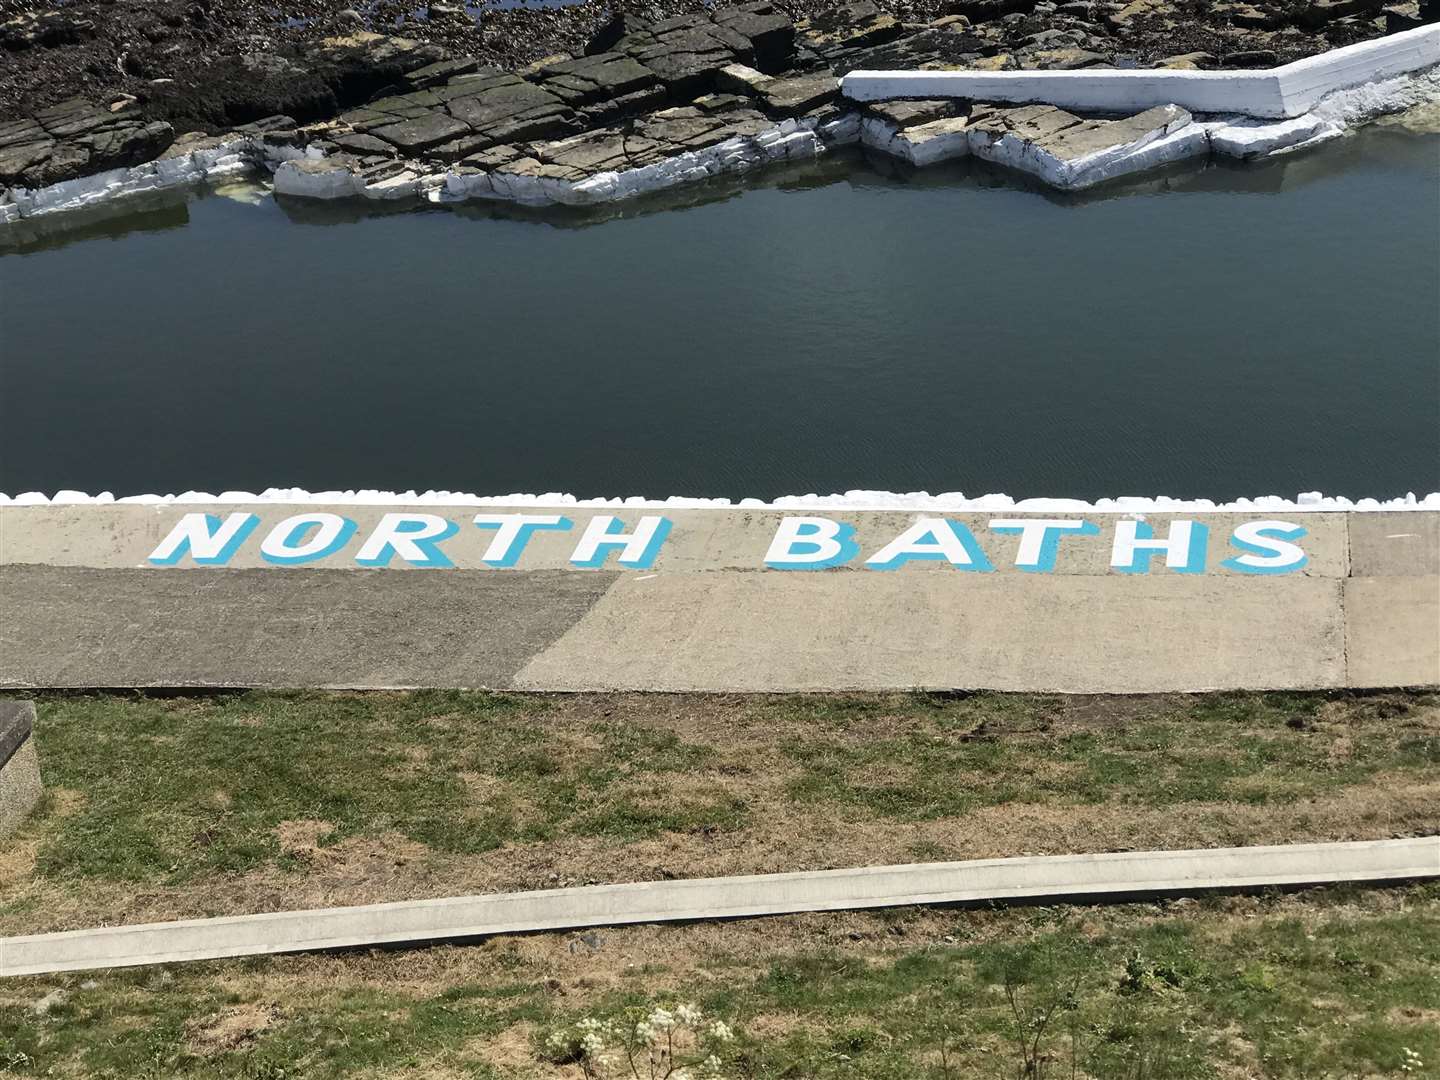 All money raised will go towards the North Baths maintenance fund.